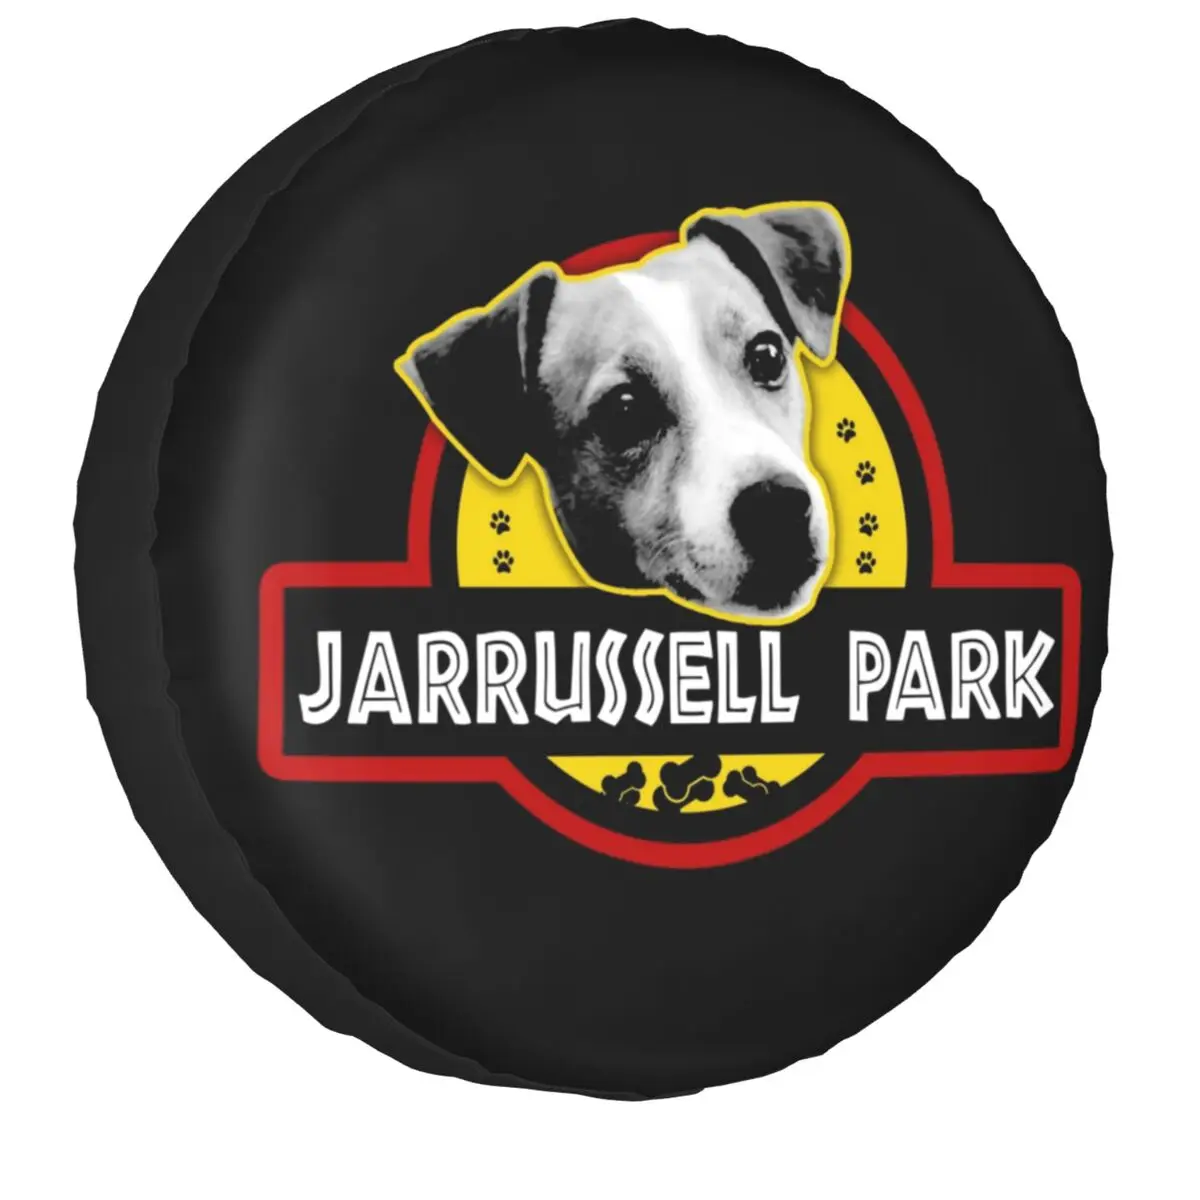 Jarrussell Park Jack Russell Terrier Köpek Stepne lastik kapak Kılıf Mitsubishi Pajero için Hayvan Araç Aksesuarları